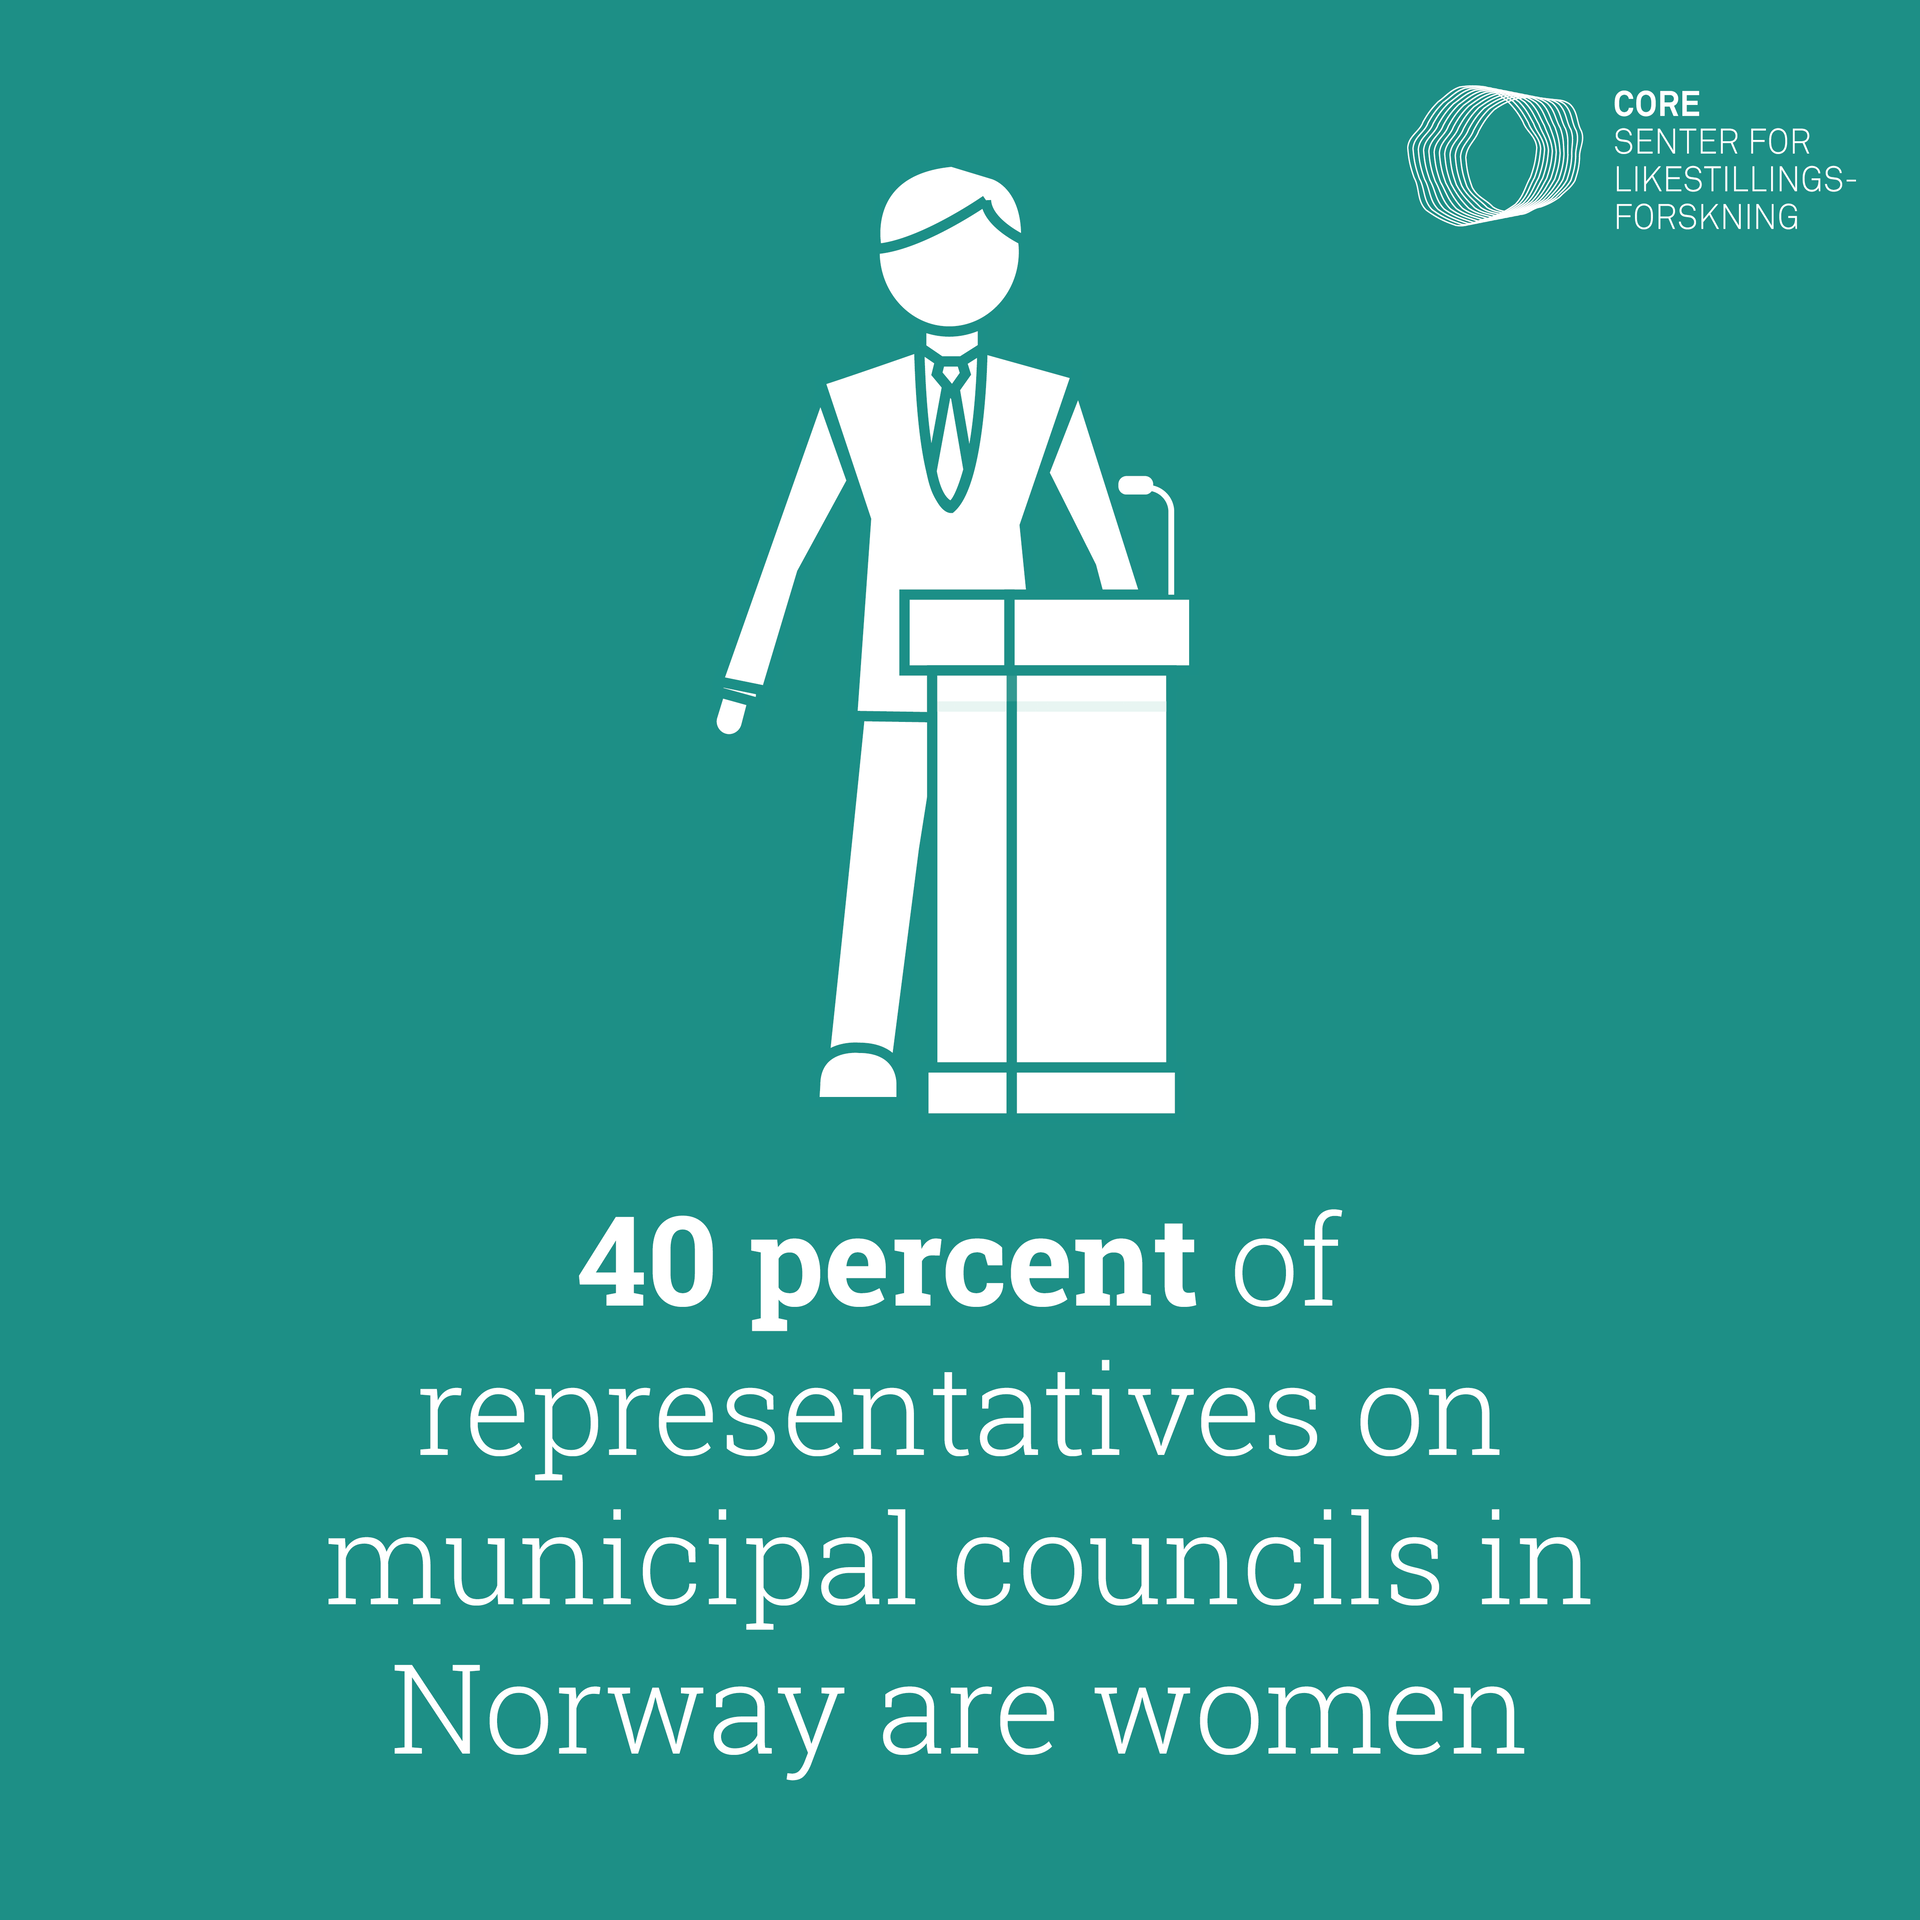 More men in minicipal councils